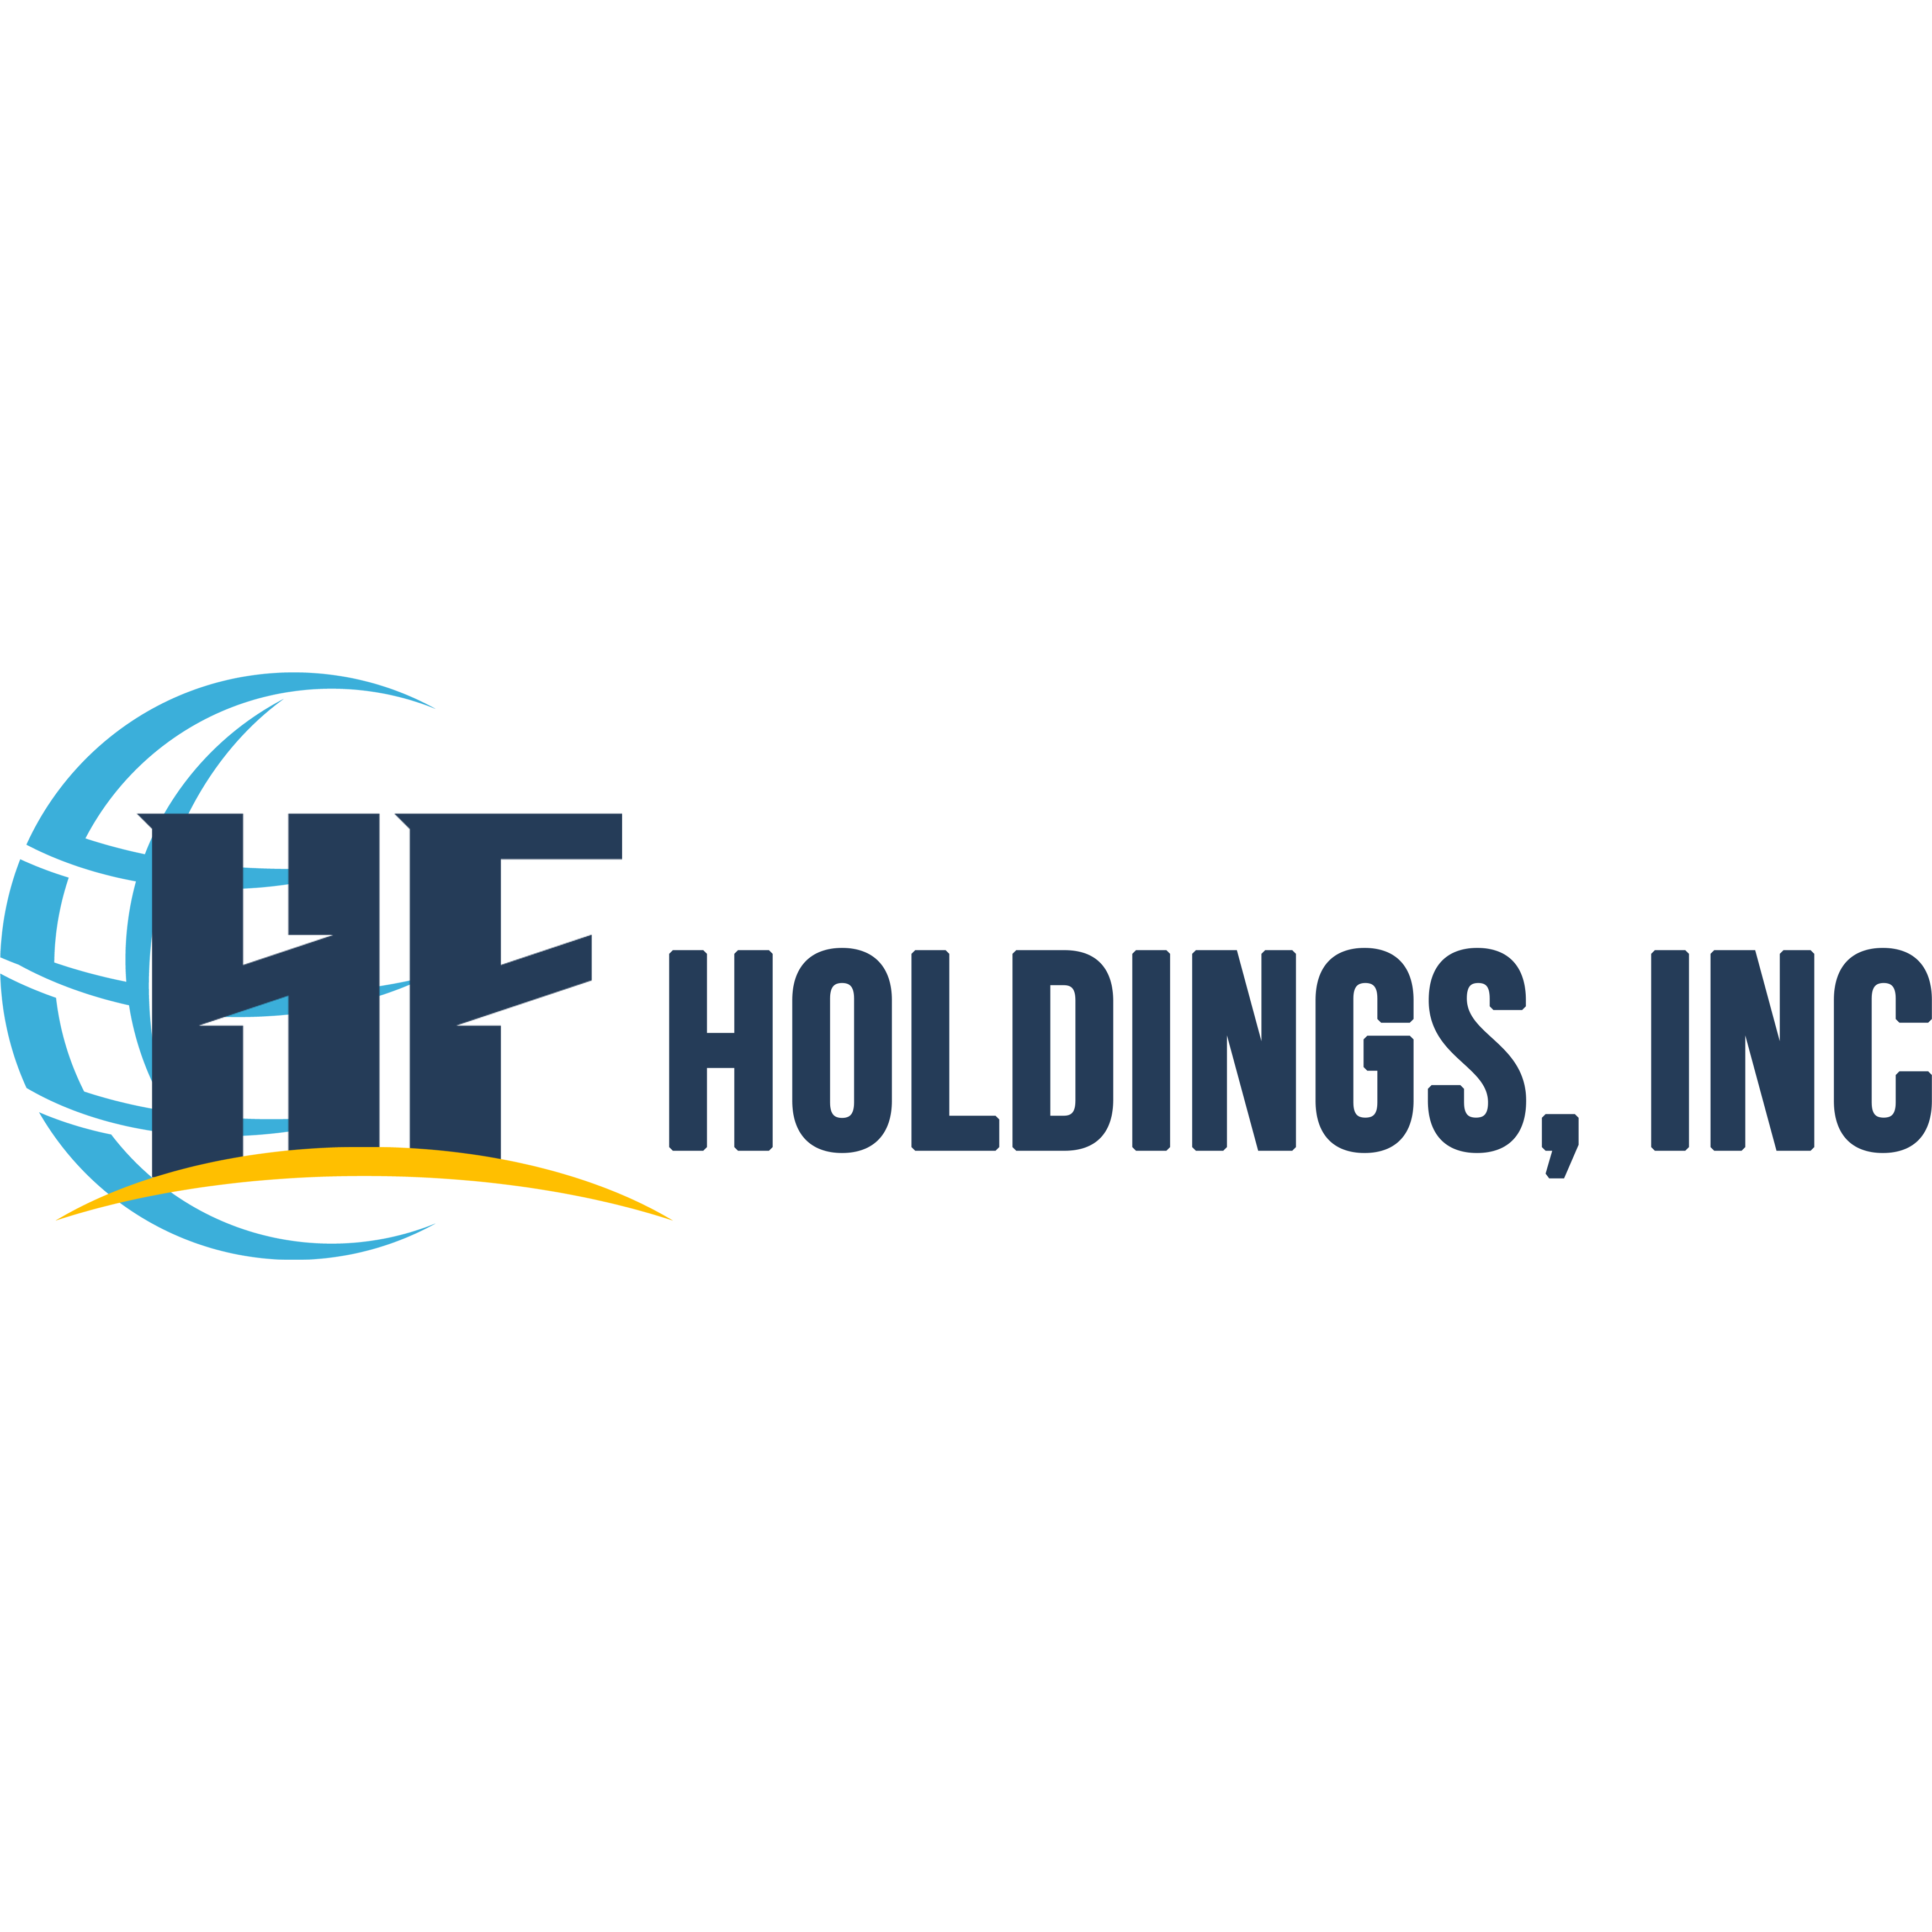 HF Holdings, Inc. Photo